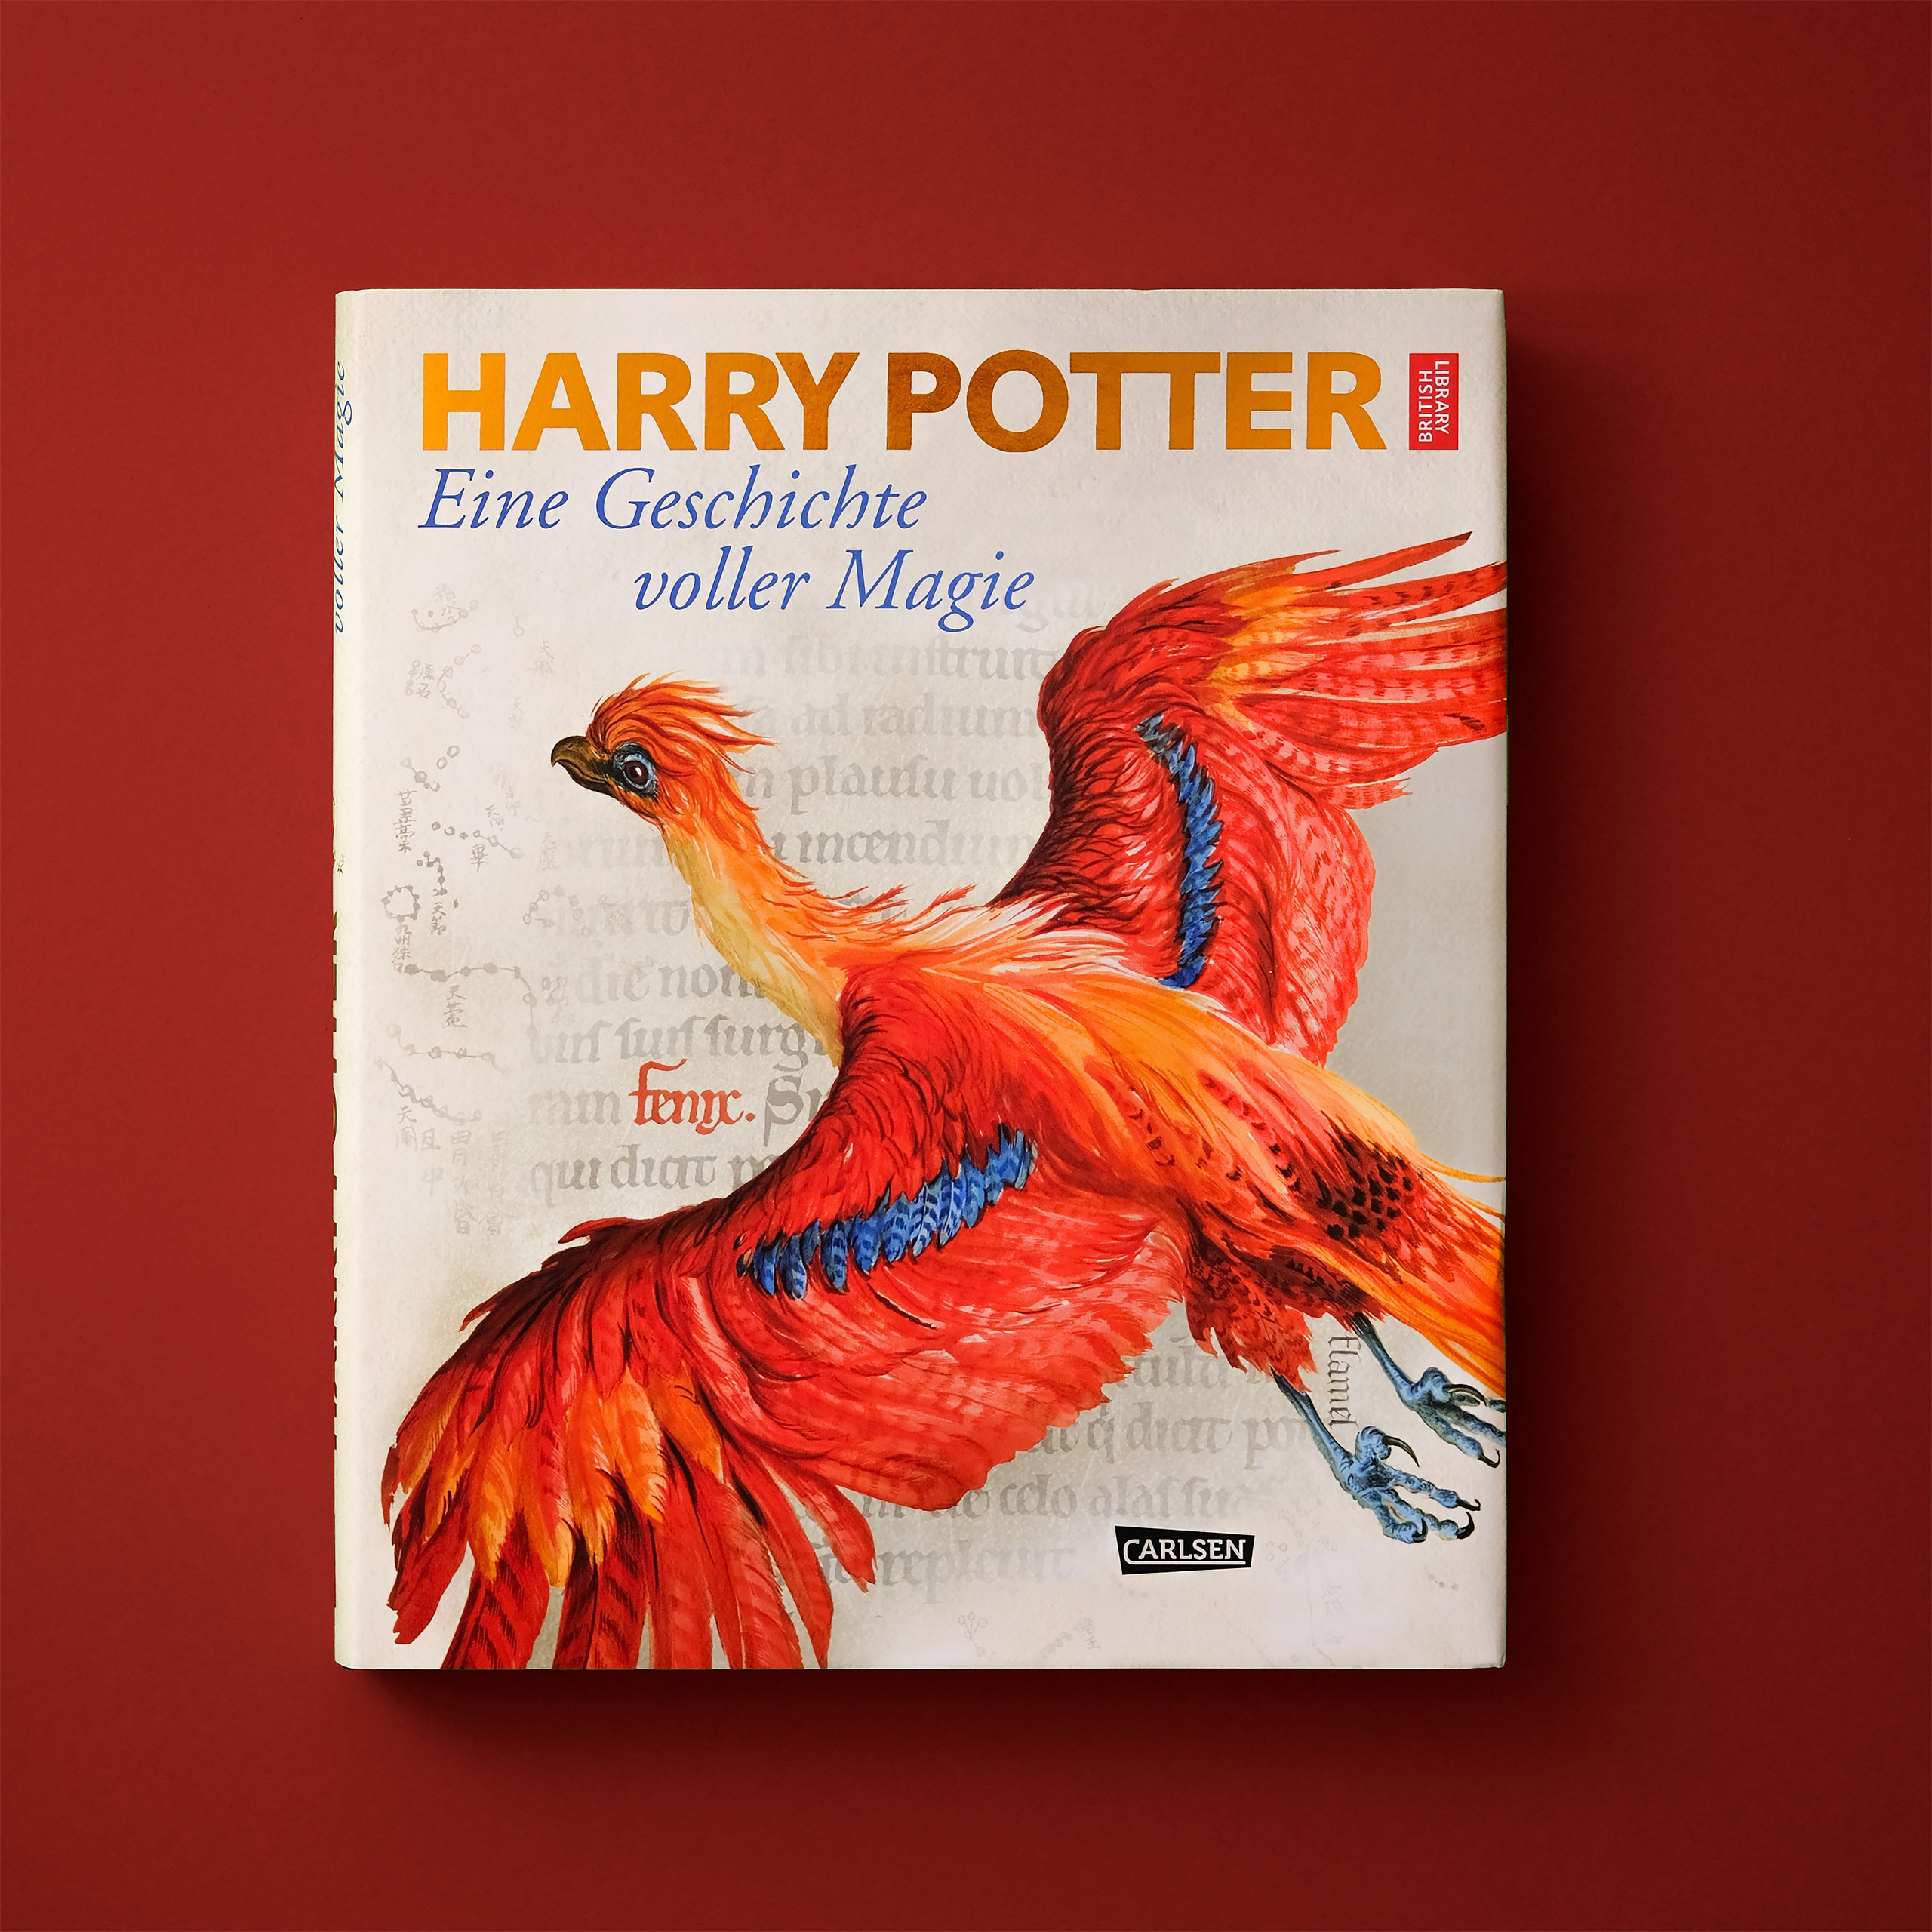 Harry Potter - A Tale of Magic